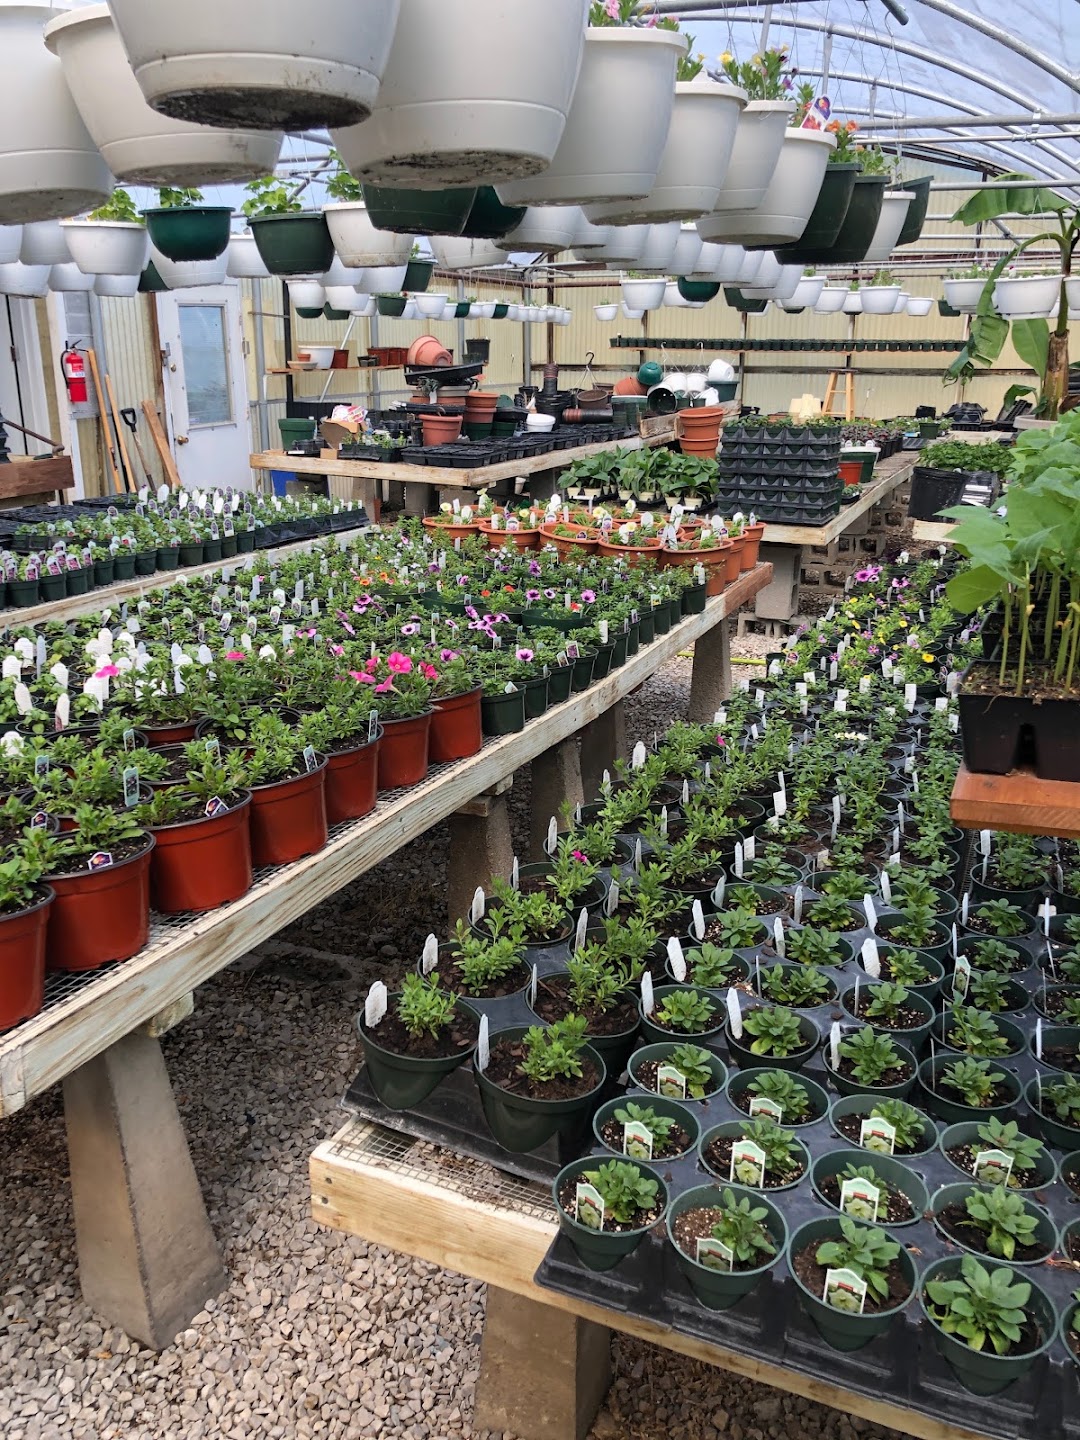 Star Florist & Greenhouses